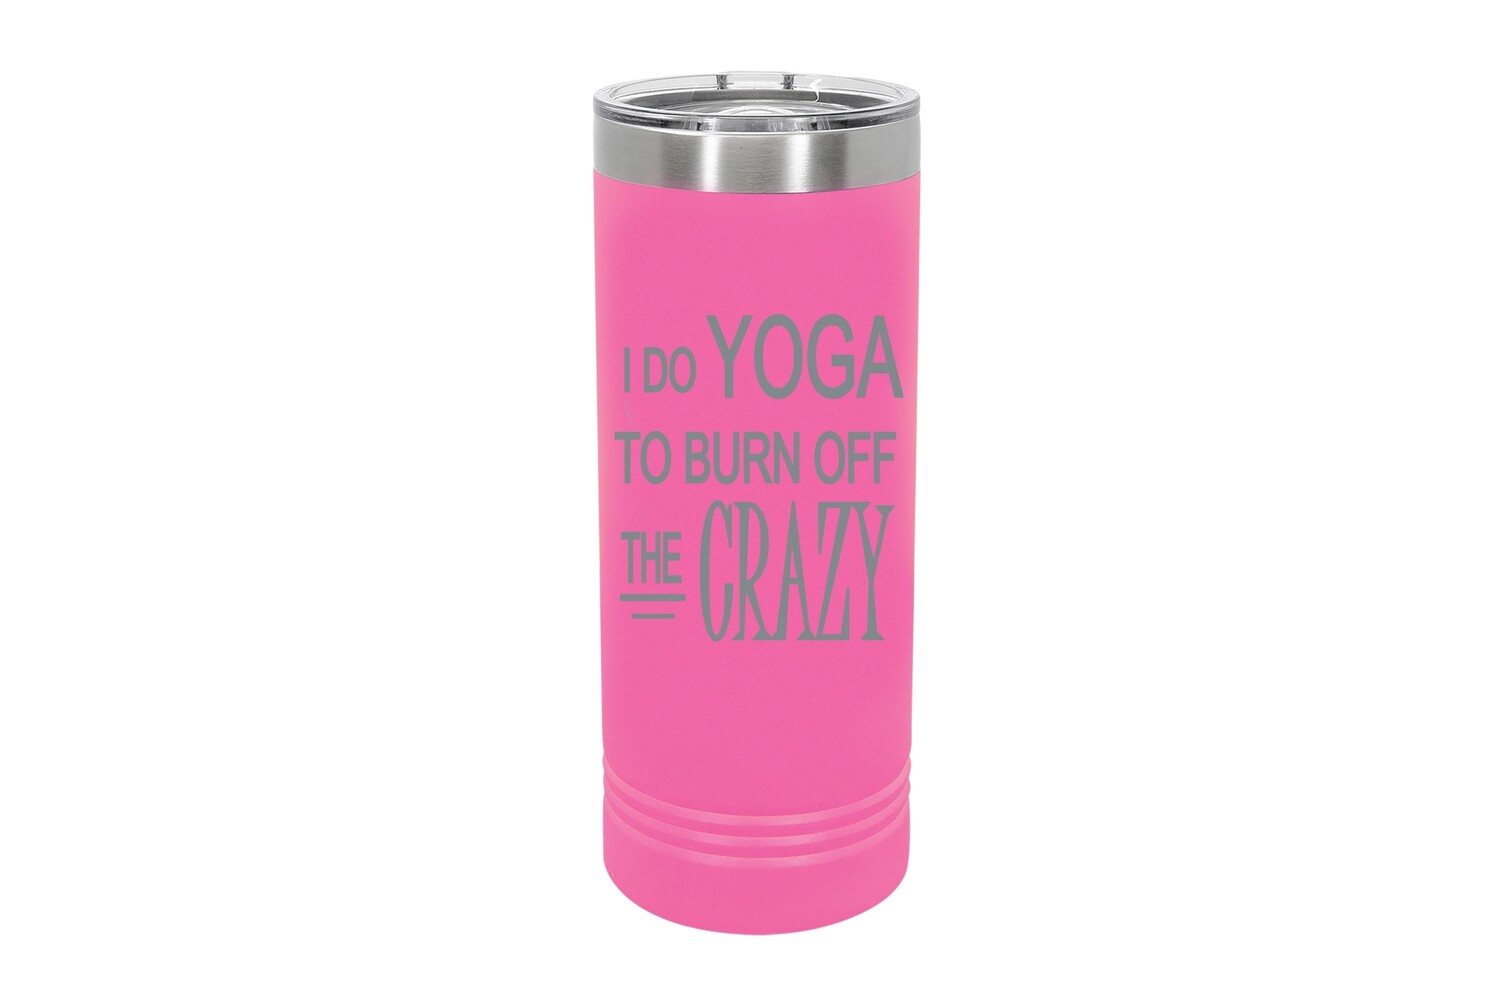 22 oz Skinny I do Yoga to burn off the Crazy Insulated Tumbler